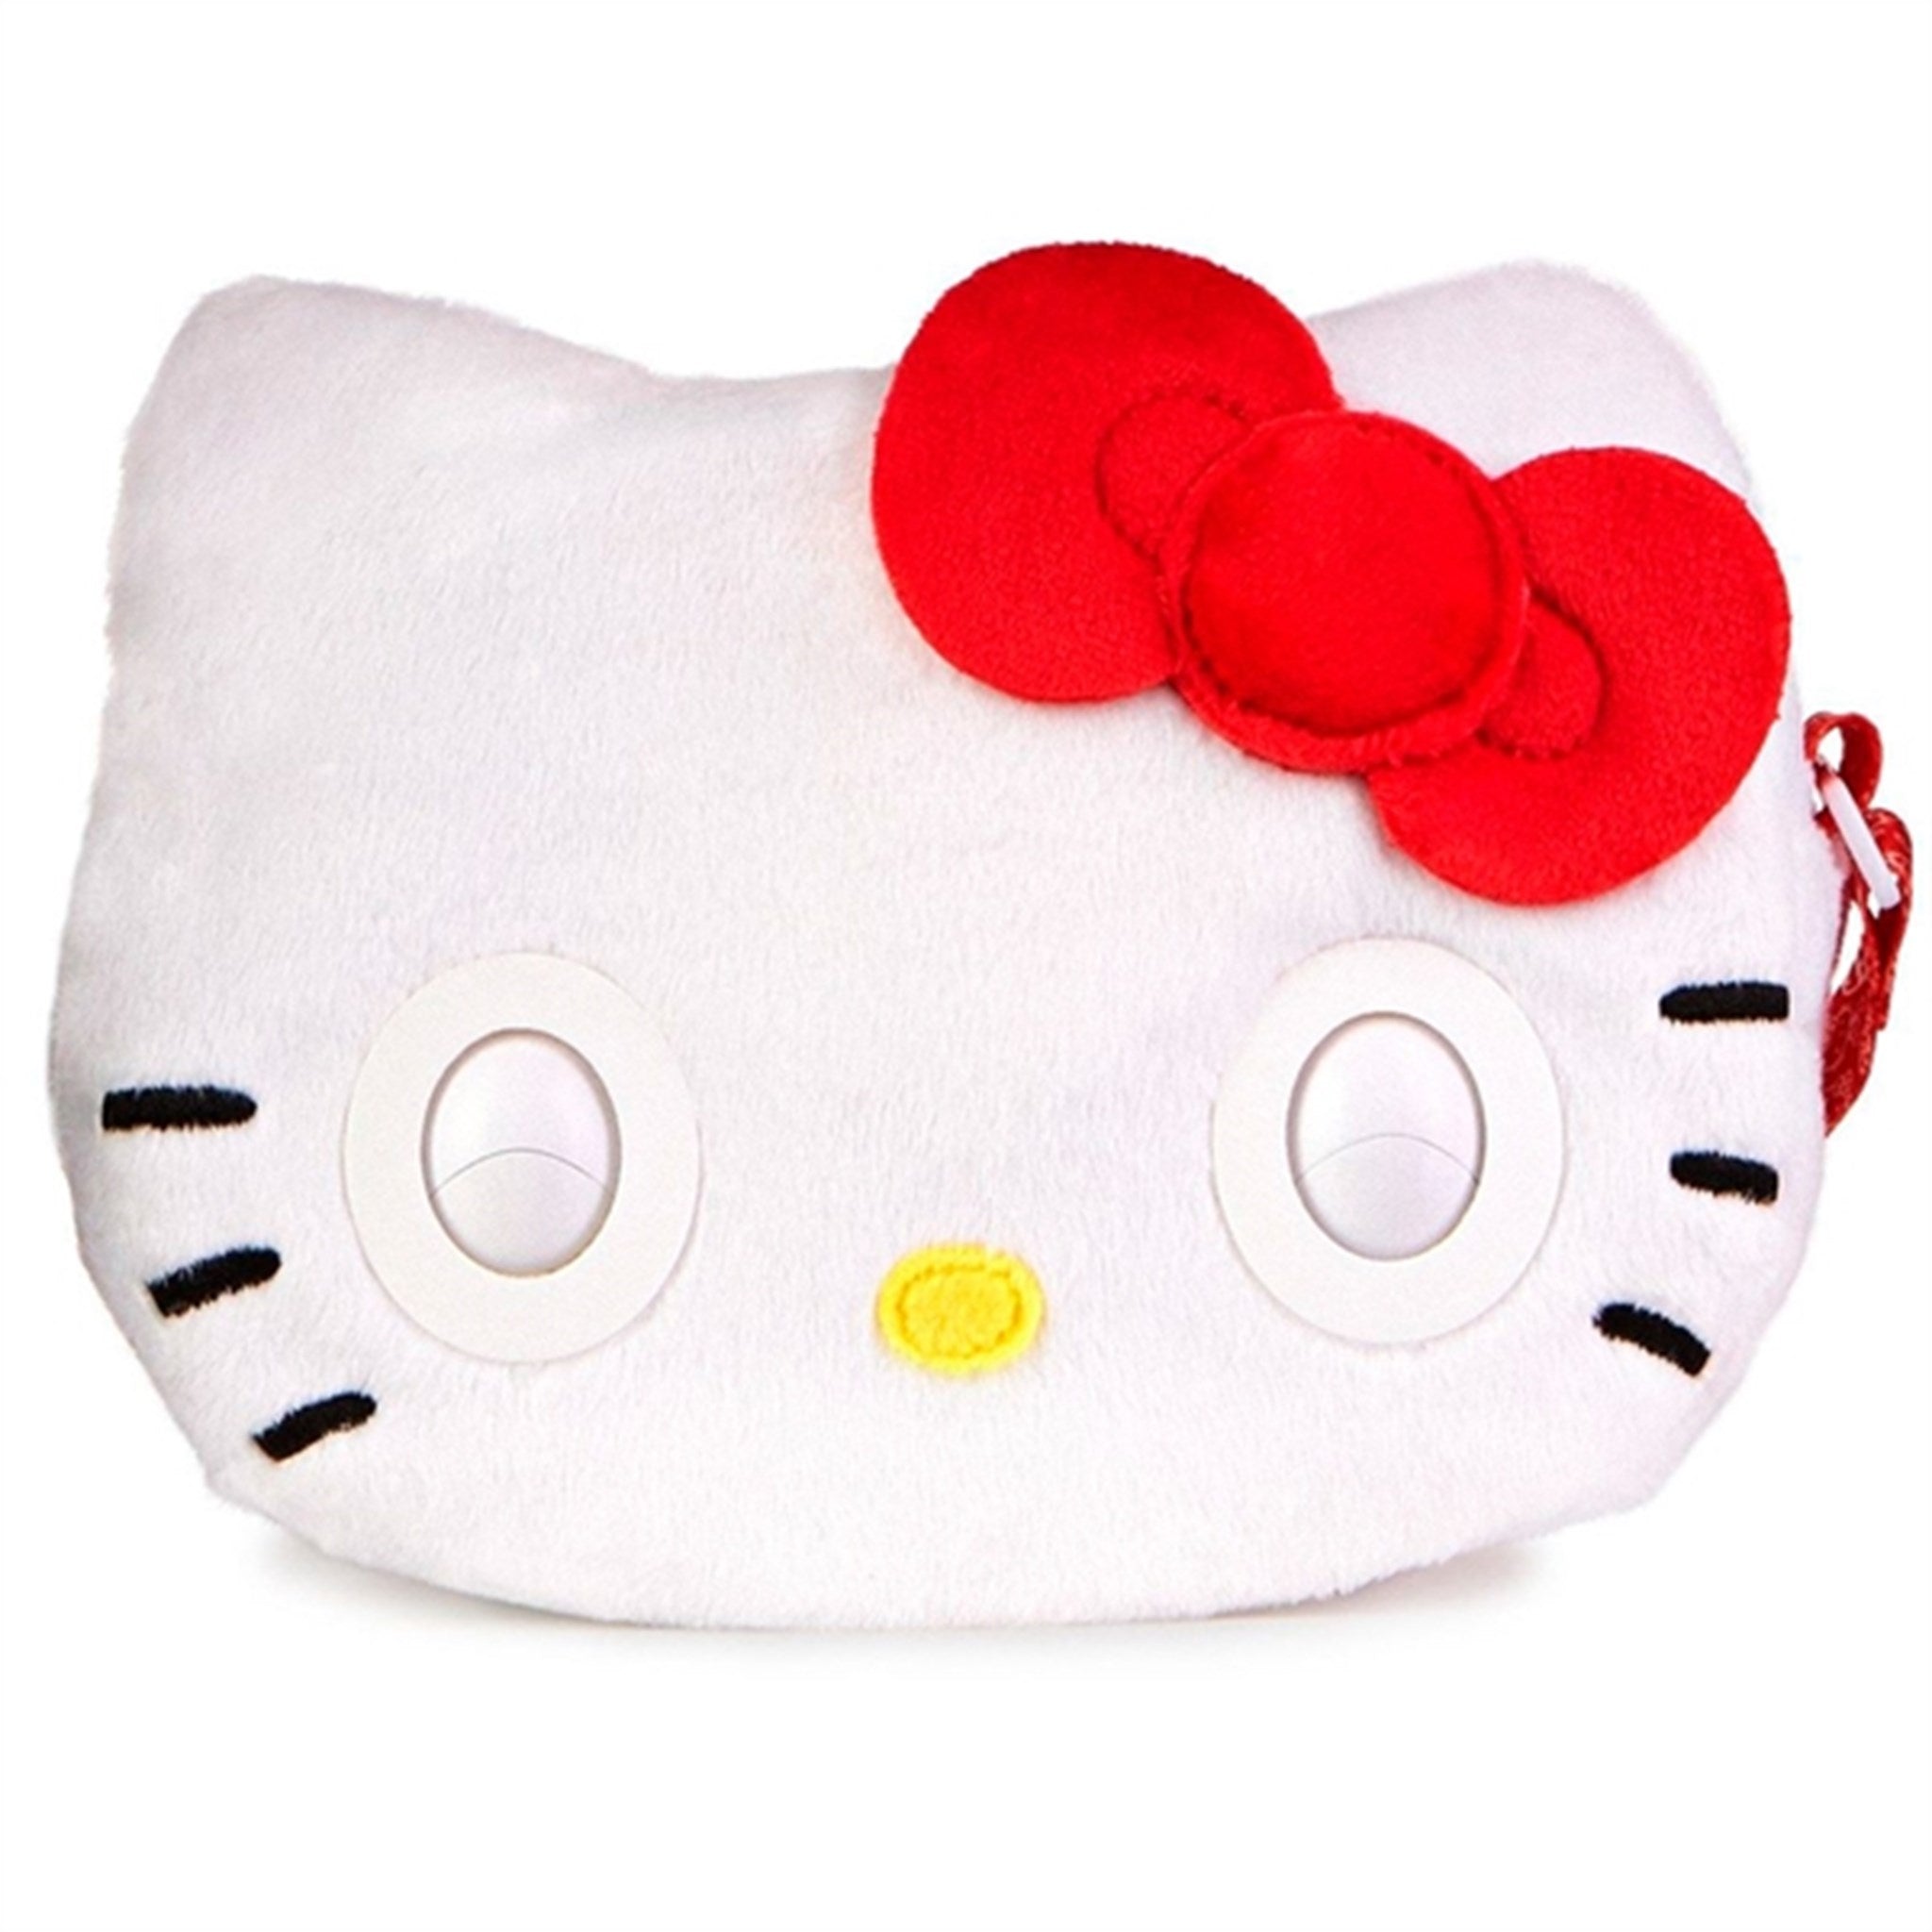 Purse Pets Sanrio Bag Hello Kitty 2